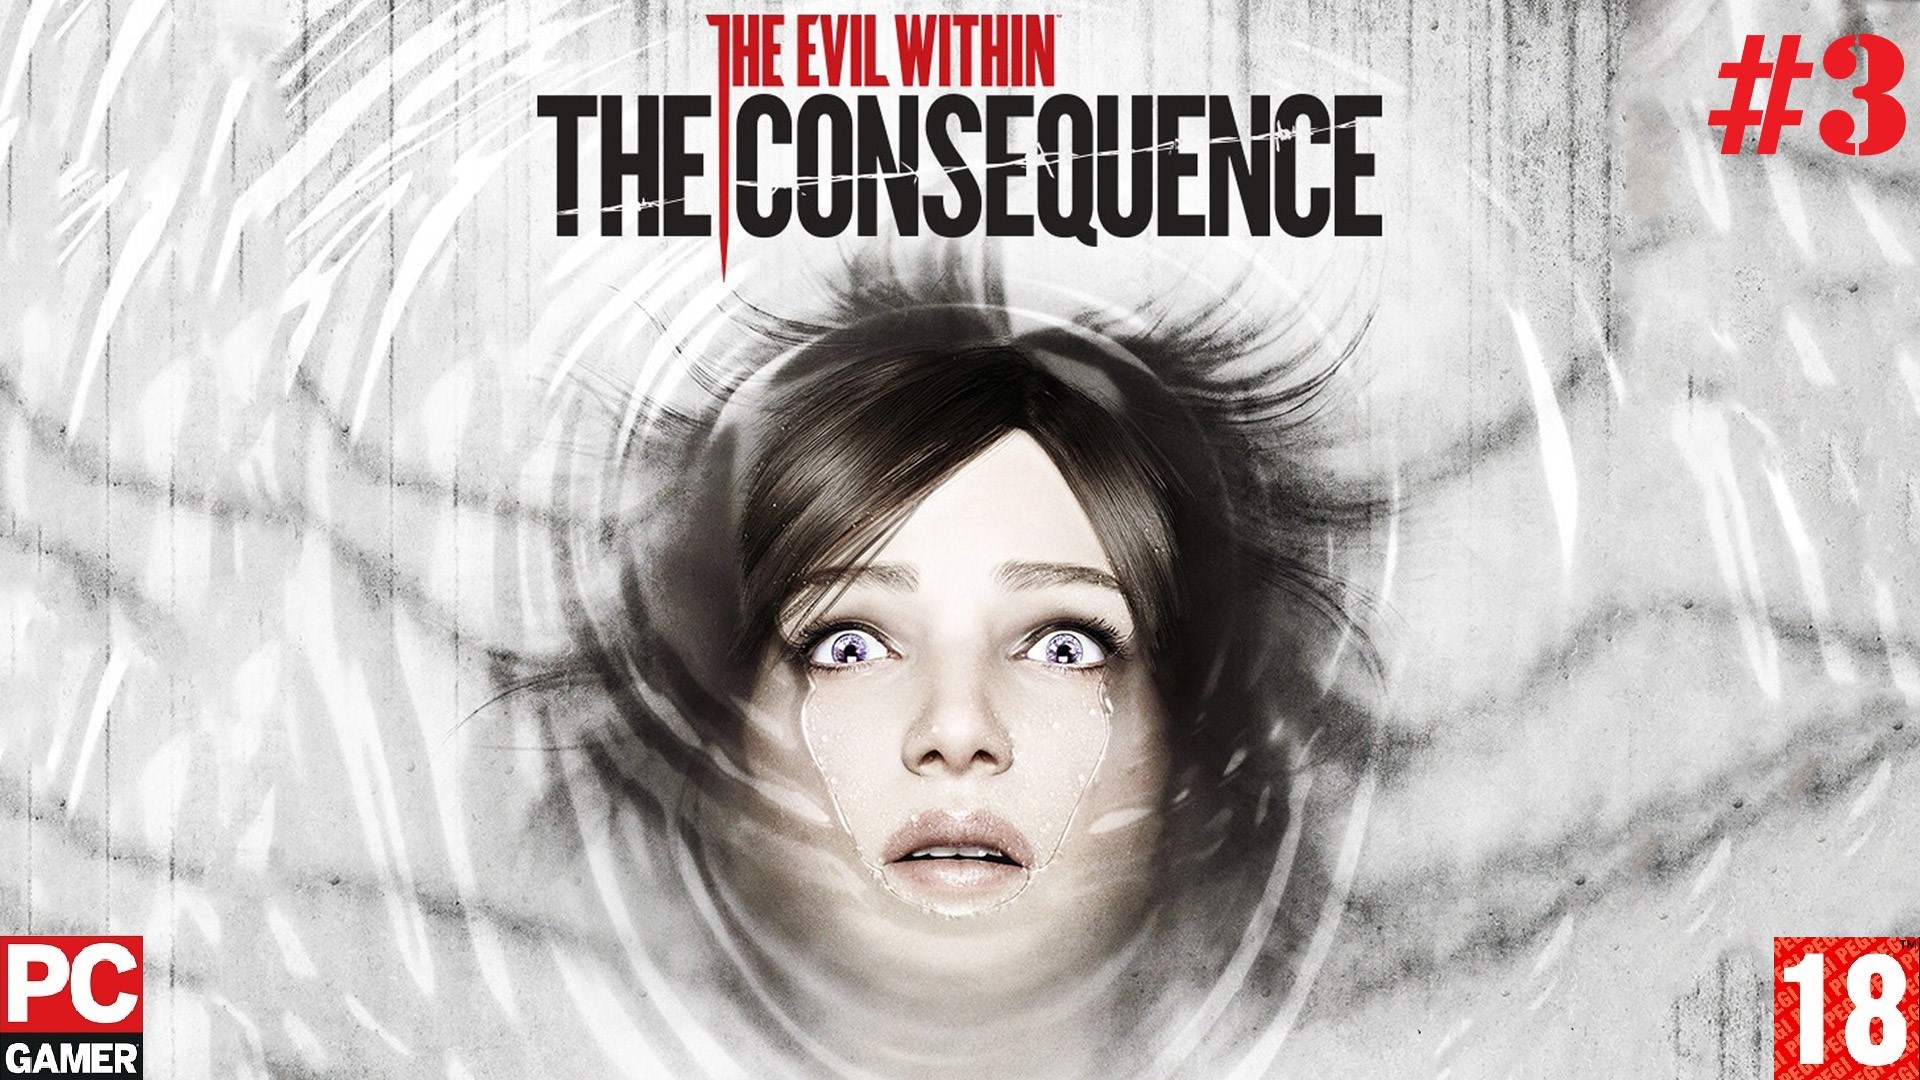 The Evil Within: The Consequence(PC) - Прохождение #3, DLC. (без комментариев) на Русском.